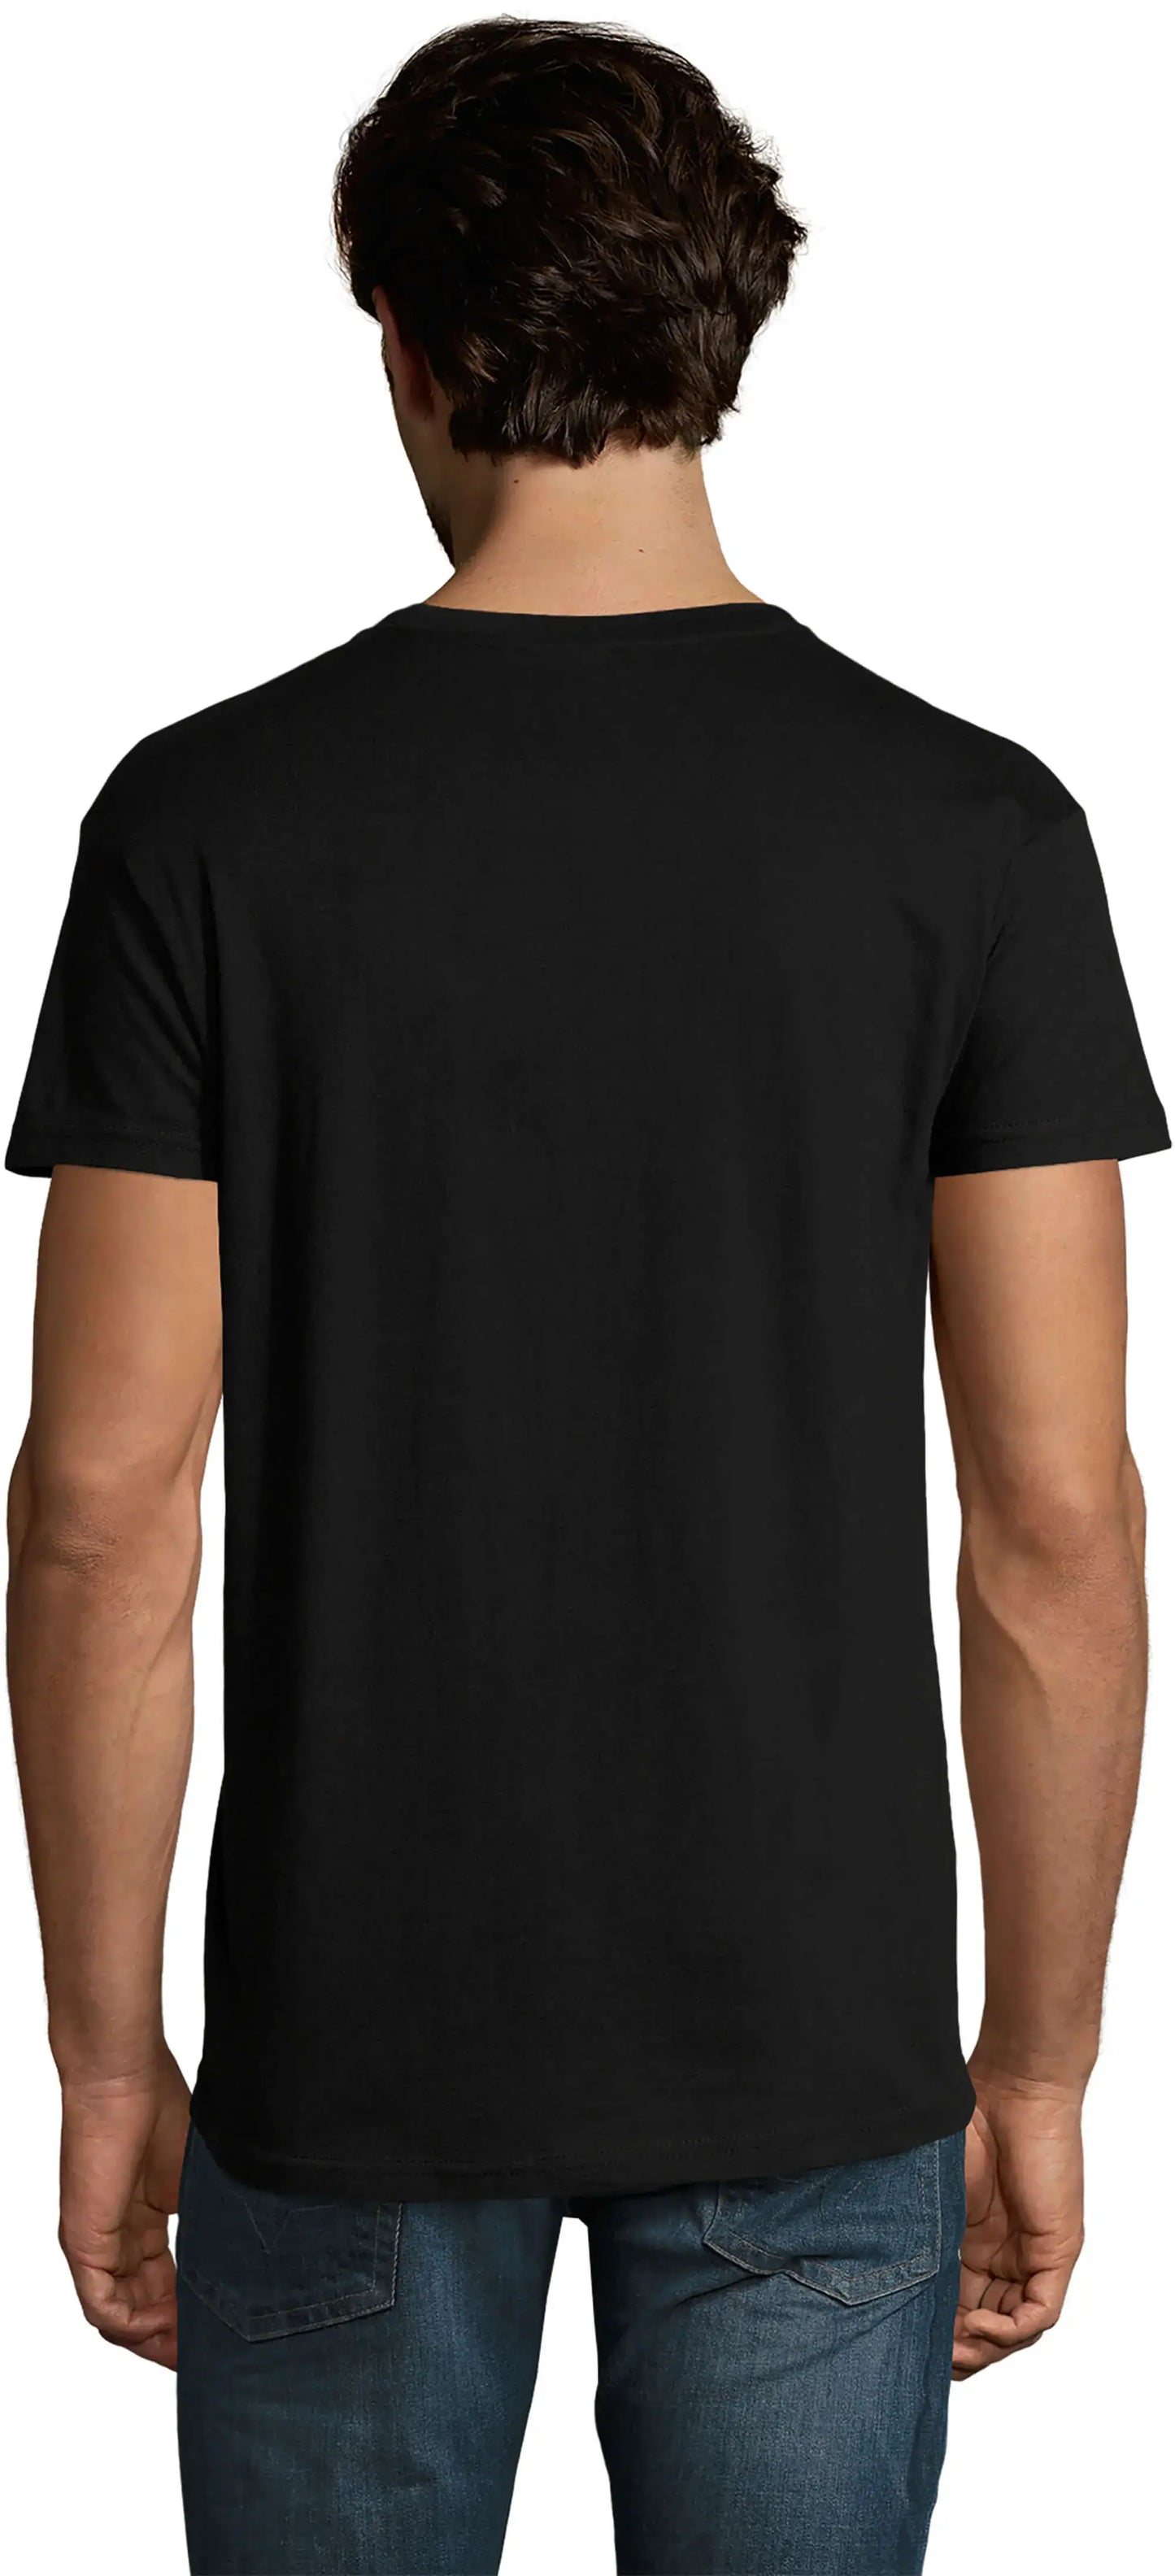 ULTRABASIC - Graphic Men's T-Shirt Ain't No Hood Like Fatherhood Printed White Letter Deep Black Round Neck